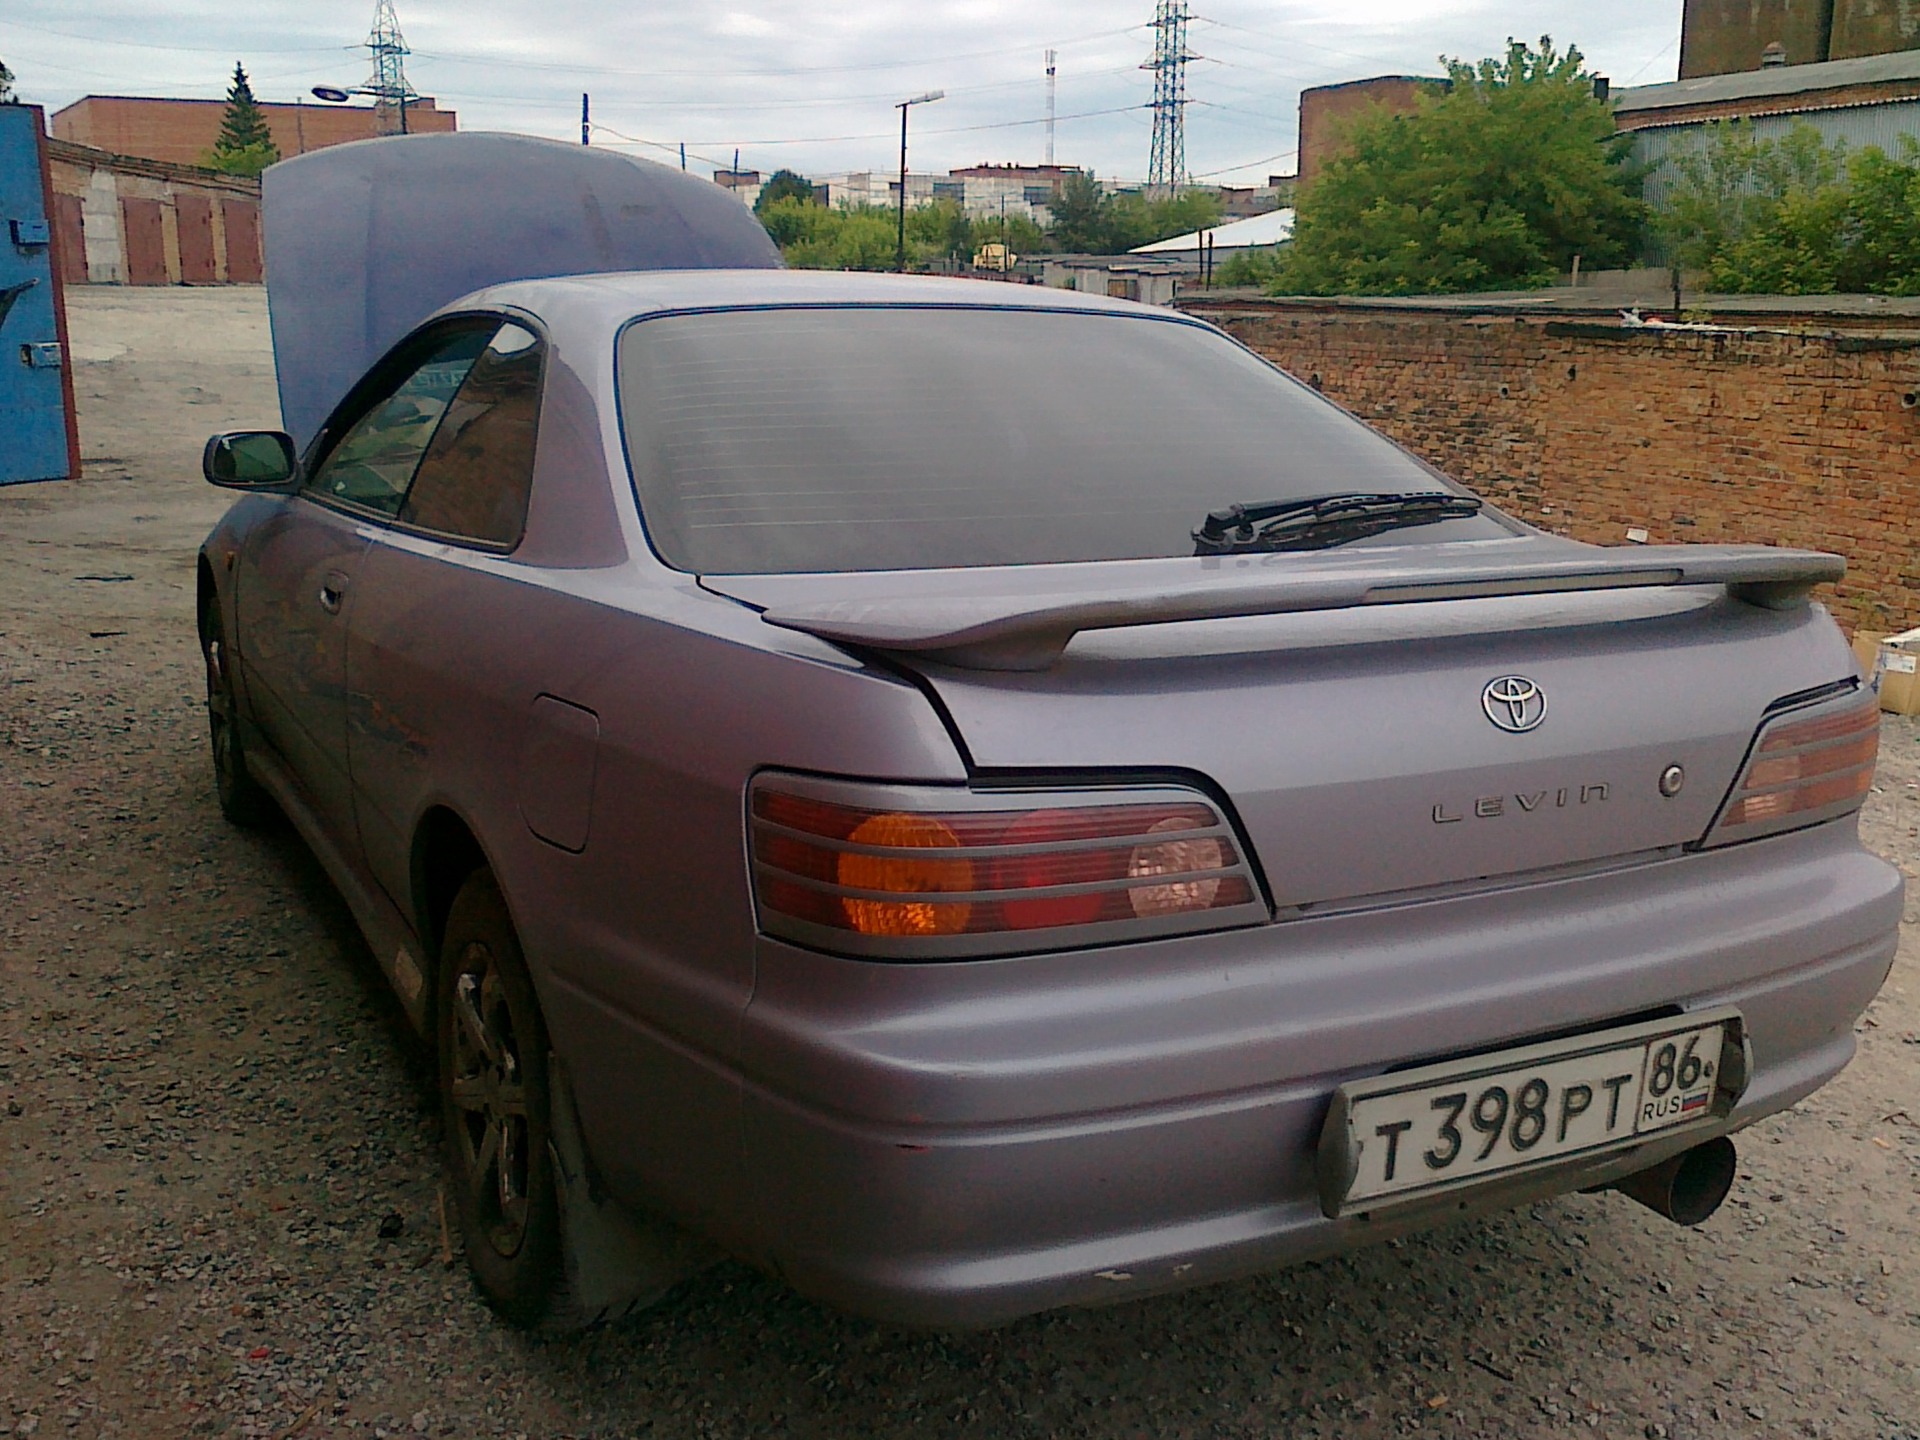       Toyota Corolla Levin 15 1997